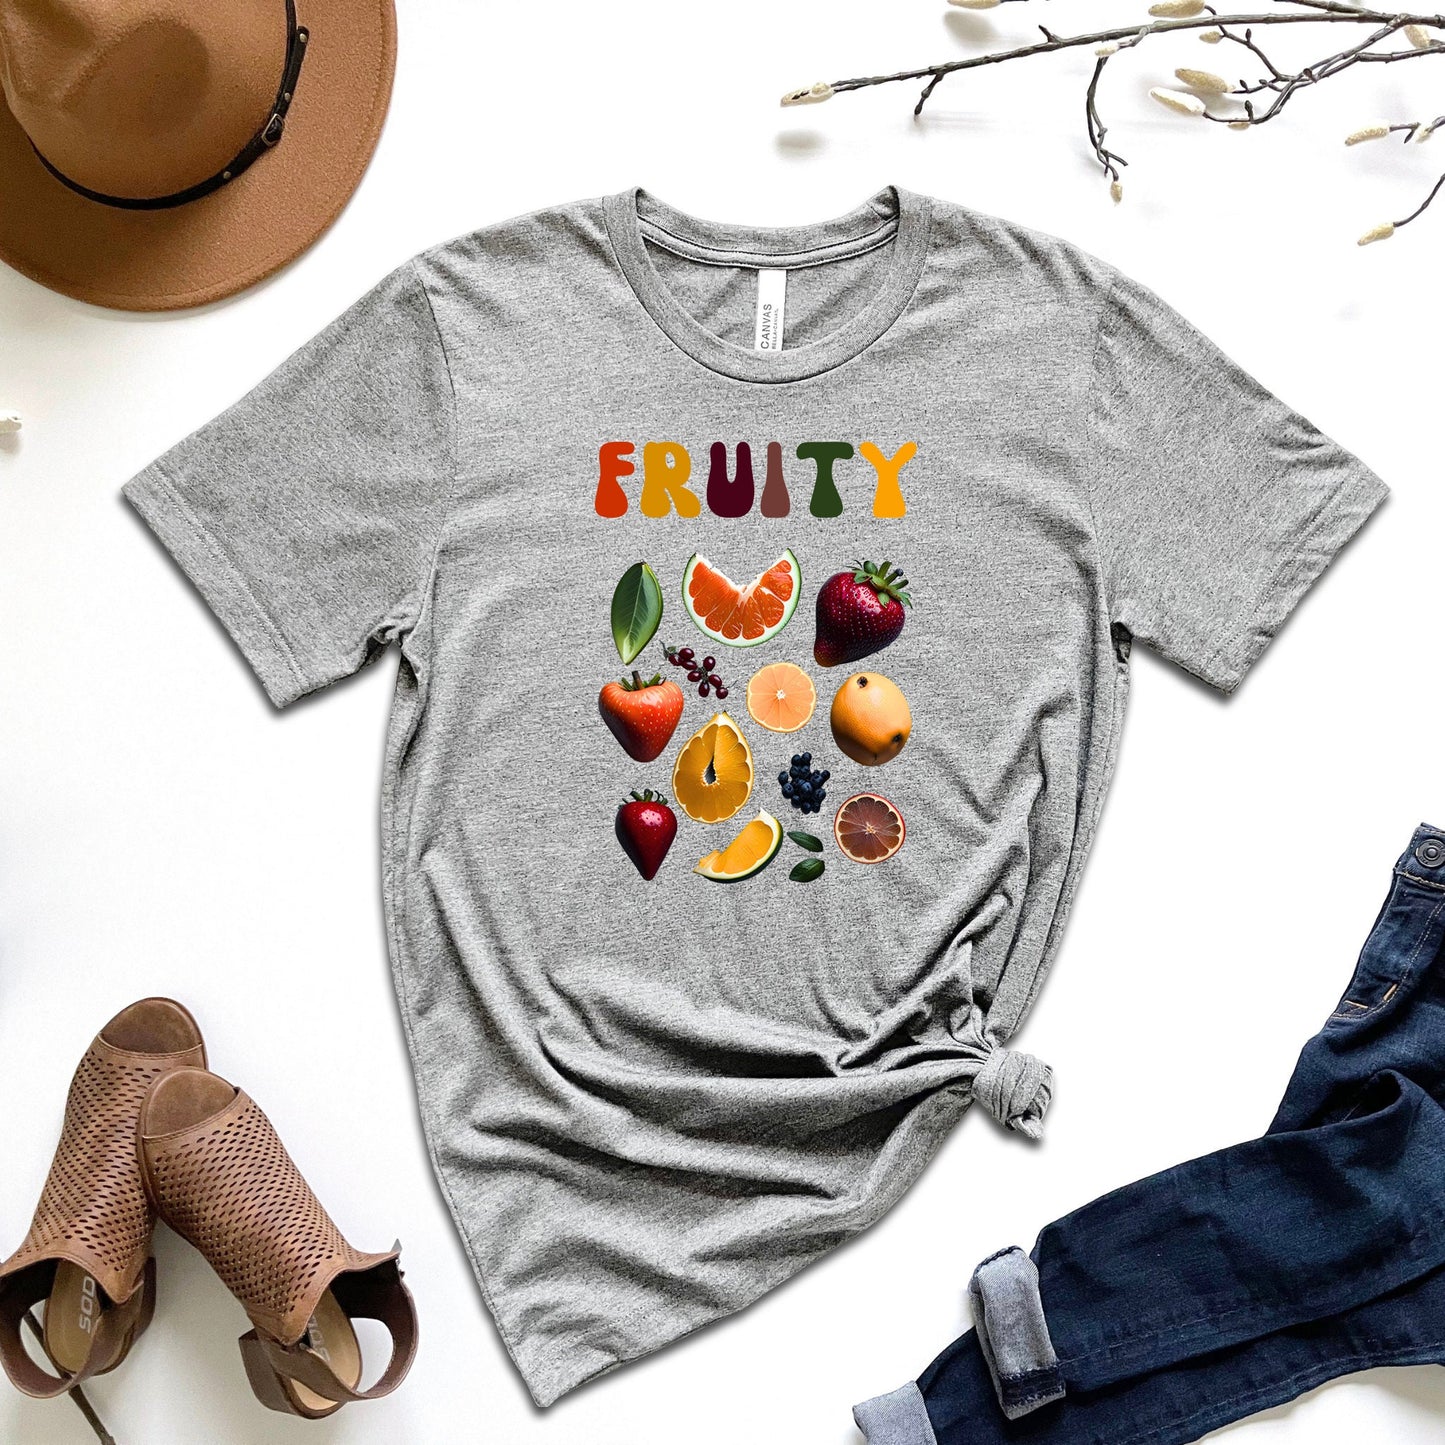 Fruity Lesbian Shirt, Strawberry Cottage core shirt, Strawberry aesthetic , Lesbian shirt, Funny Lesbian, Subtle Lesbian Shirt